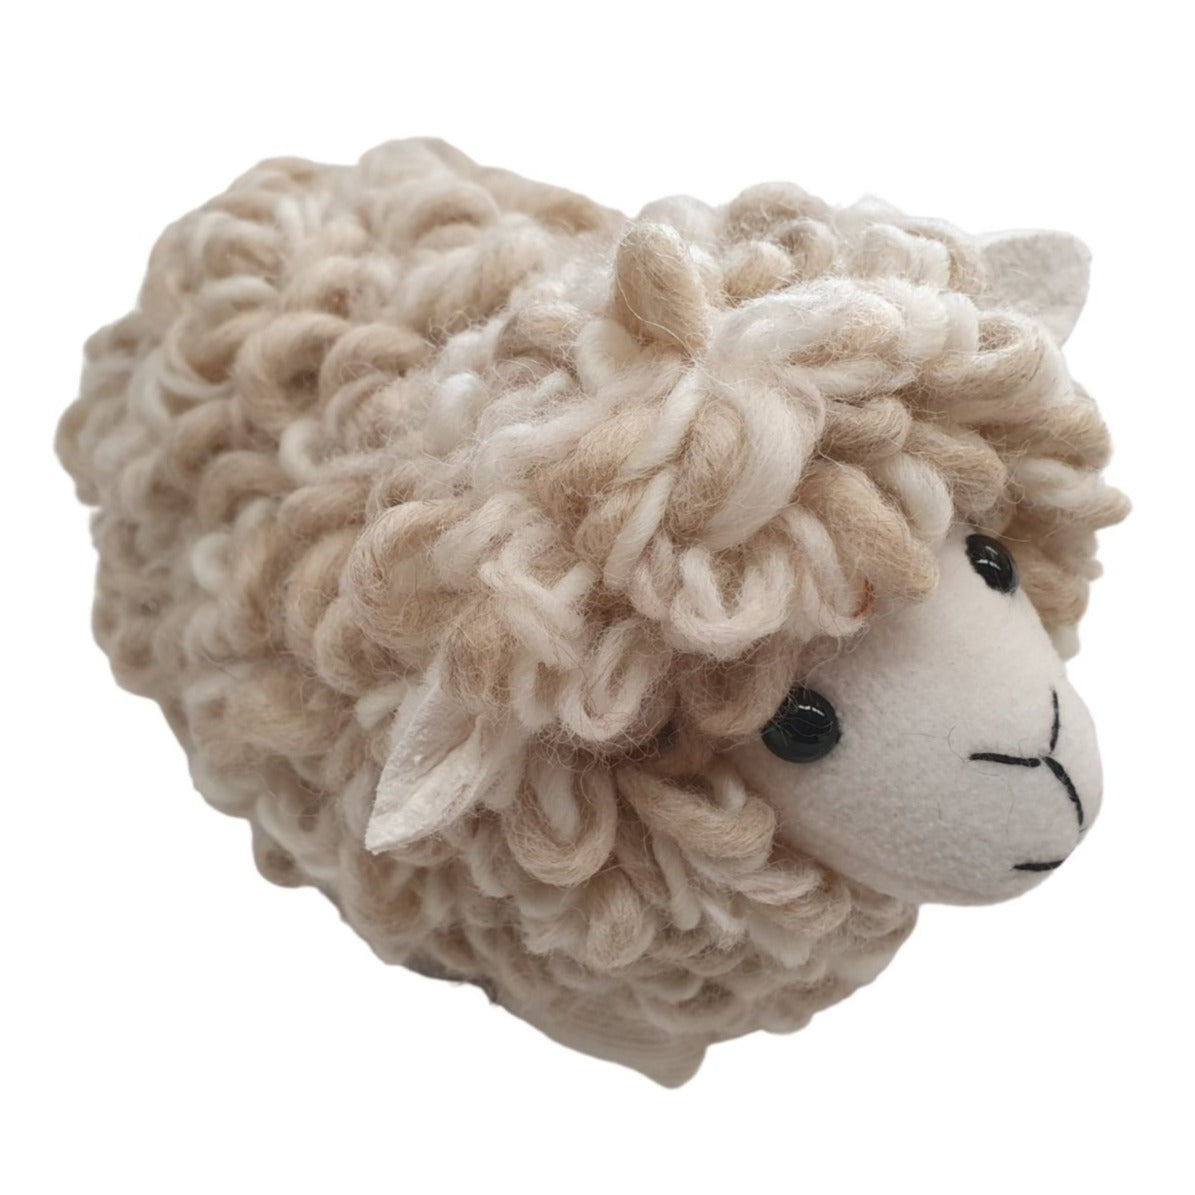 wool-sheep-textured 